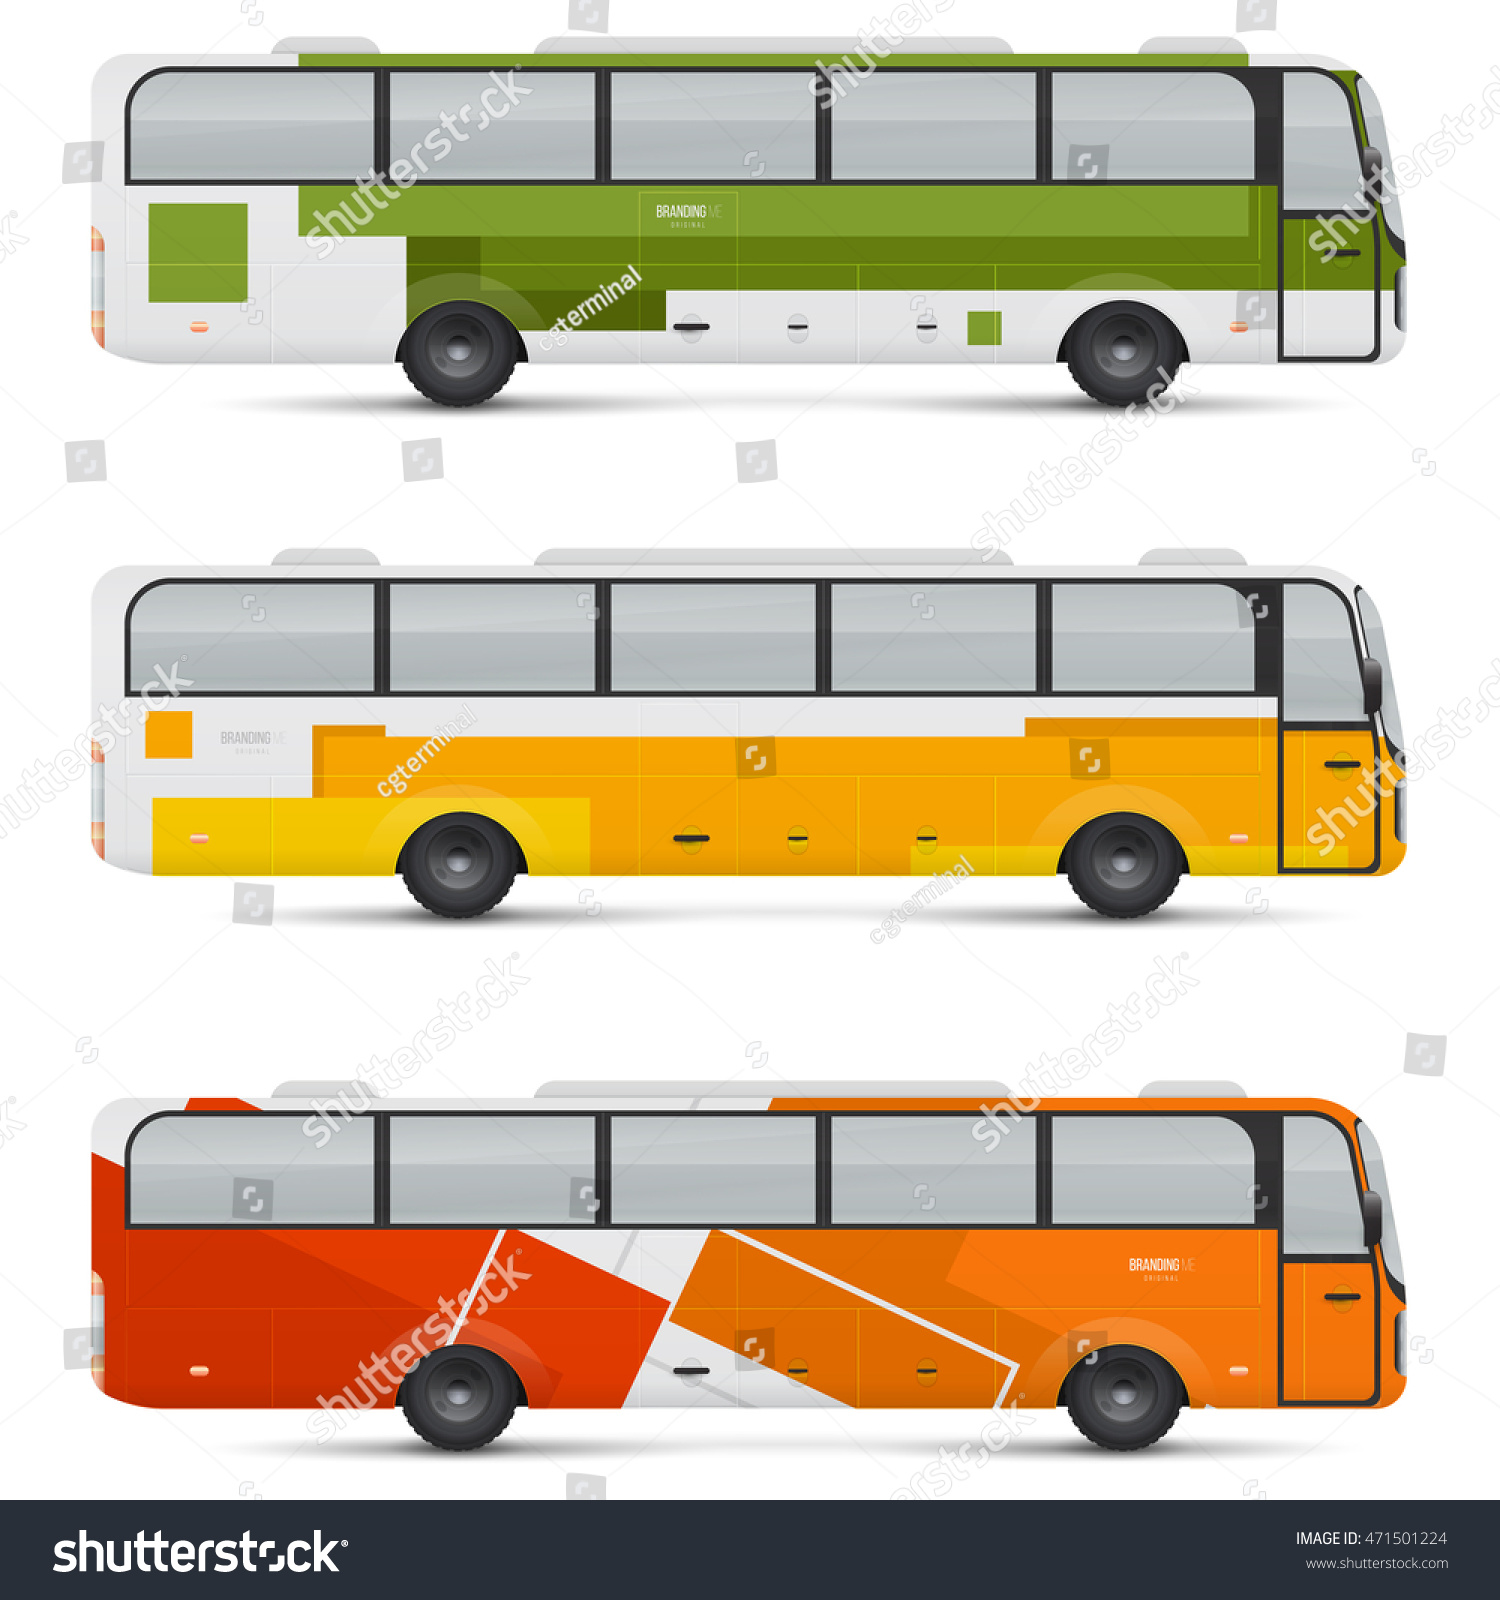 Download Mockup Of Passenger Bus Design Templates For Royalty Free Stock Vector 471501224 Avopix Com